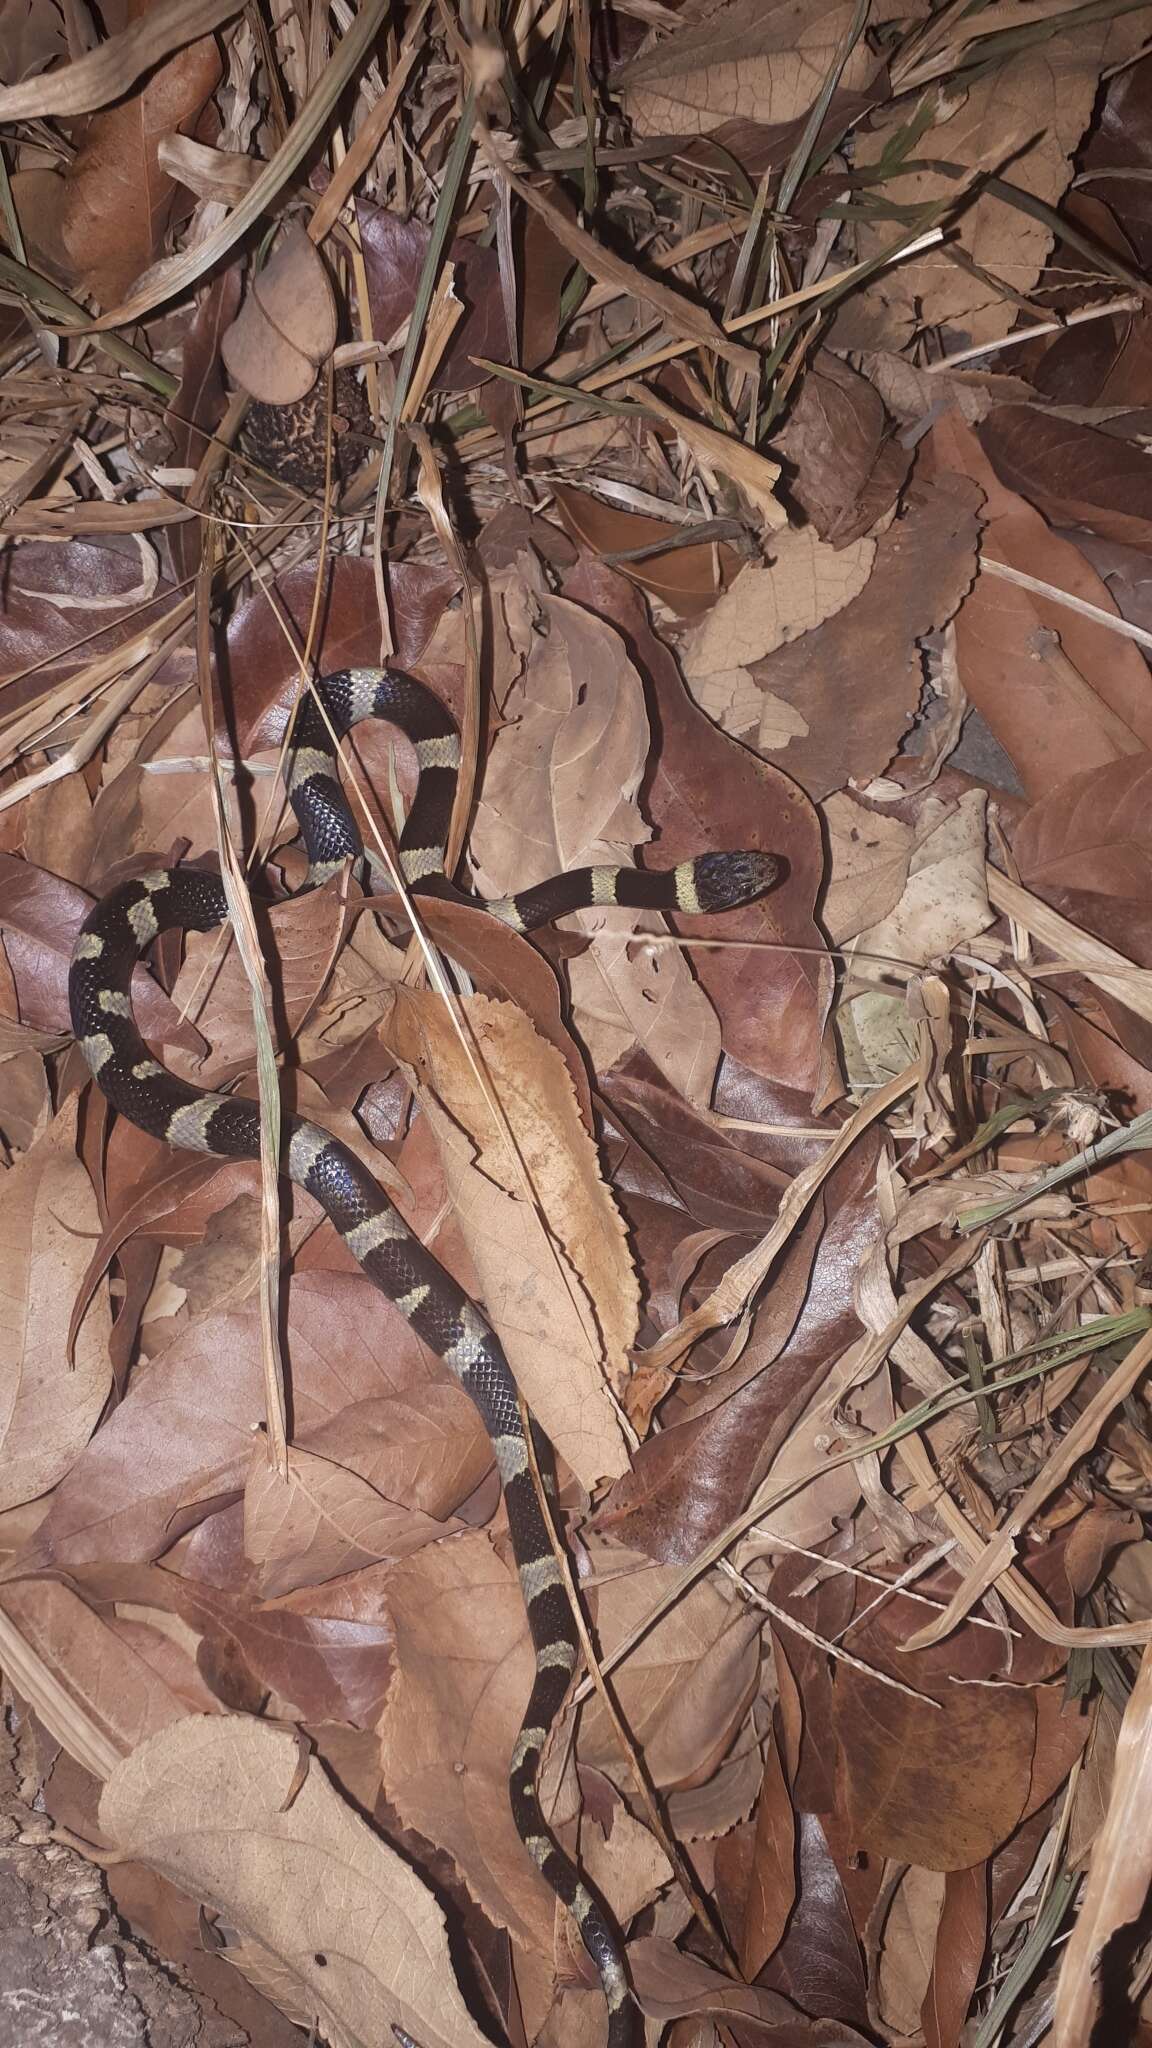 Image of Black-banded Cat-eyed Snake